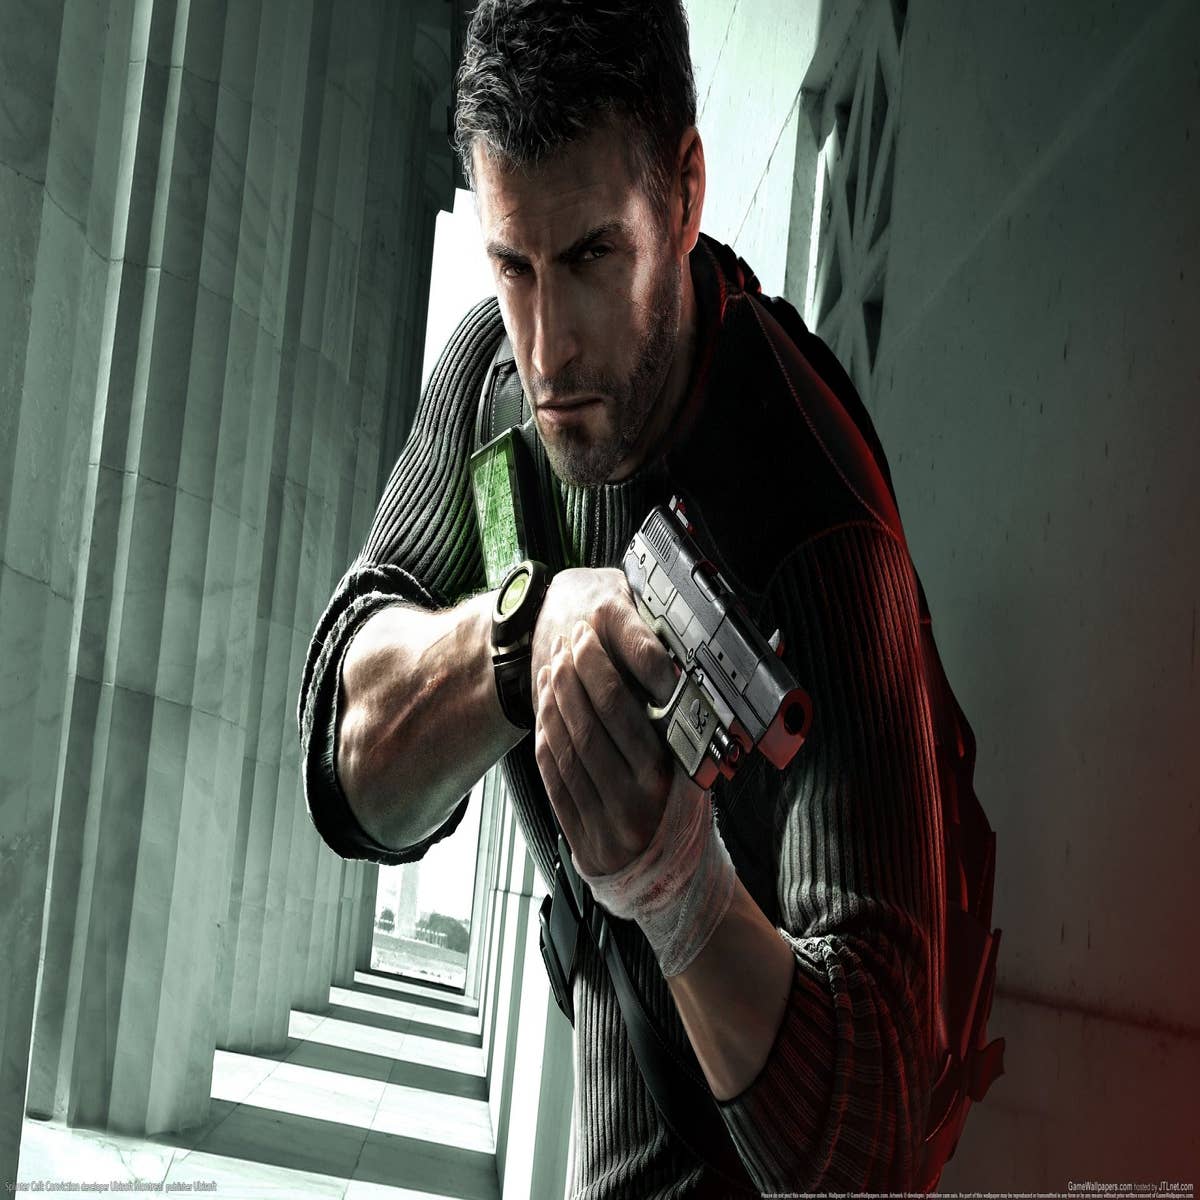 Splinter Cell: Conviction tops weak April sales - NPD - GameSpot